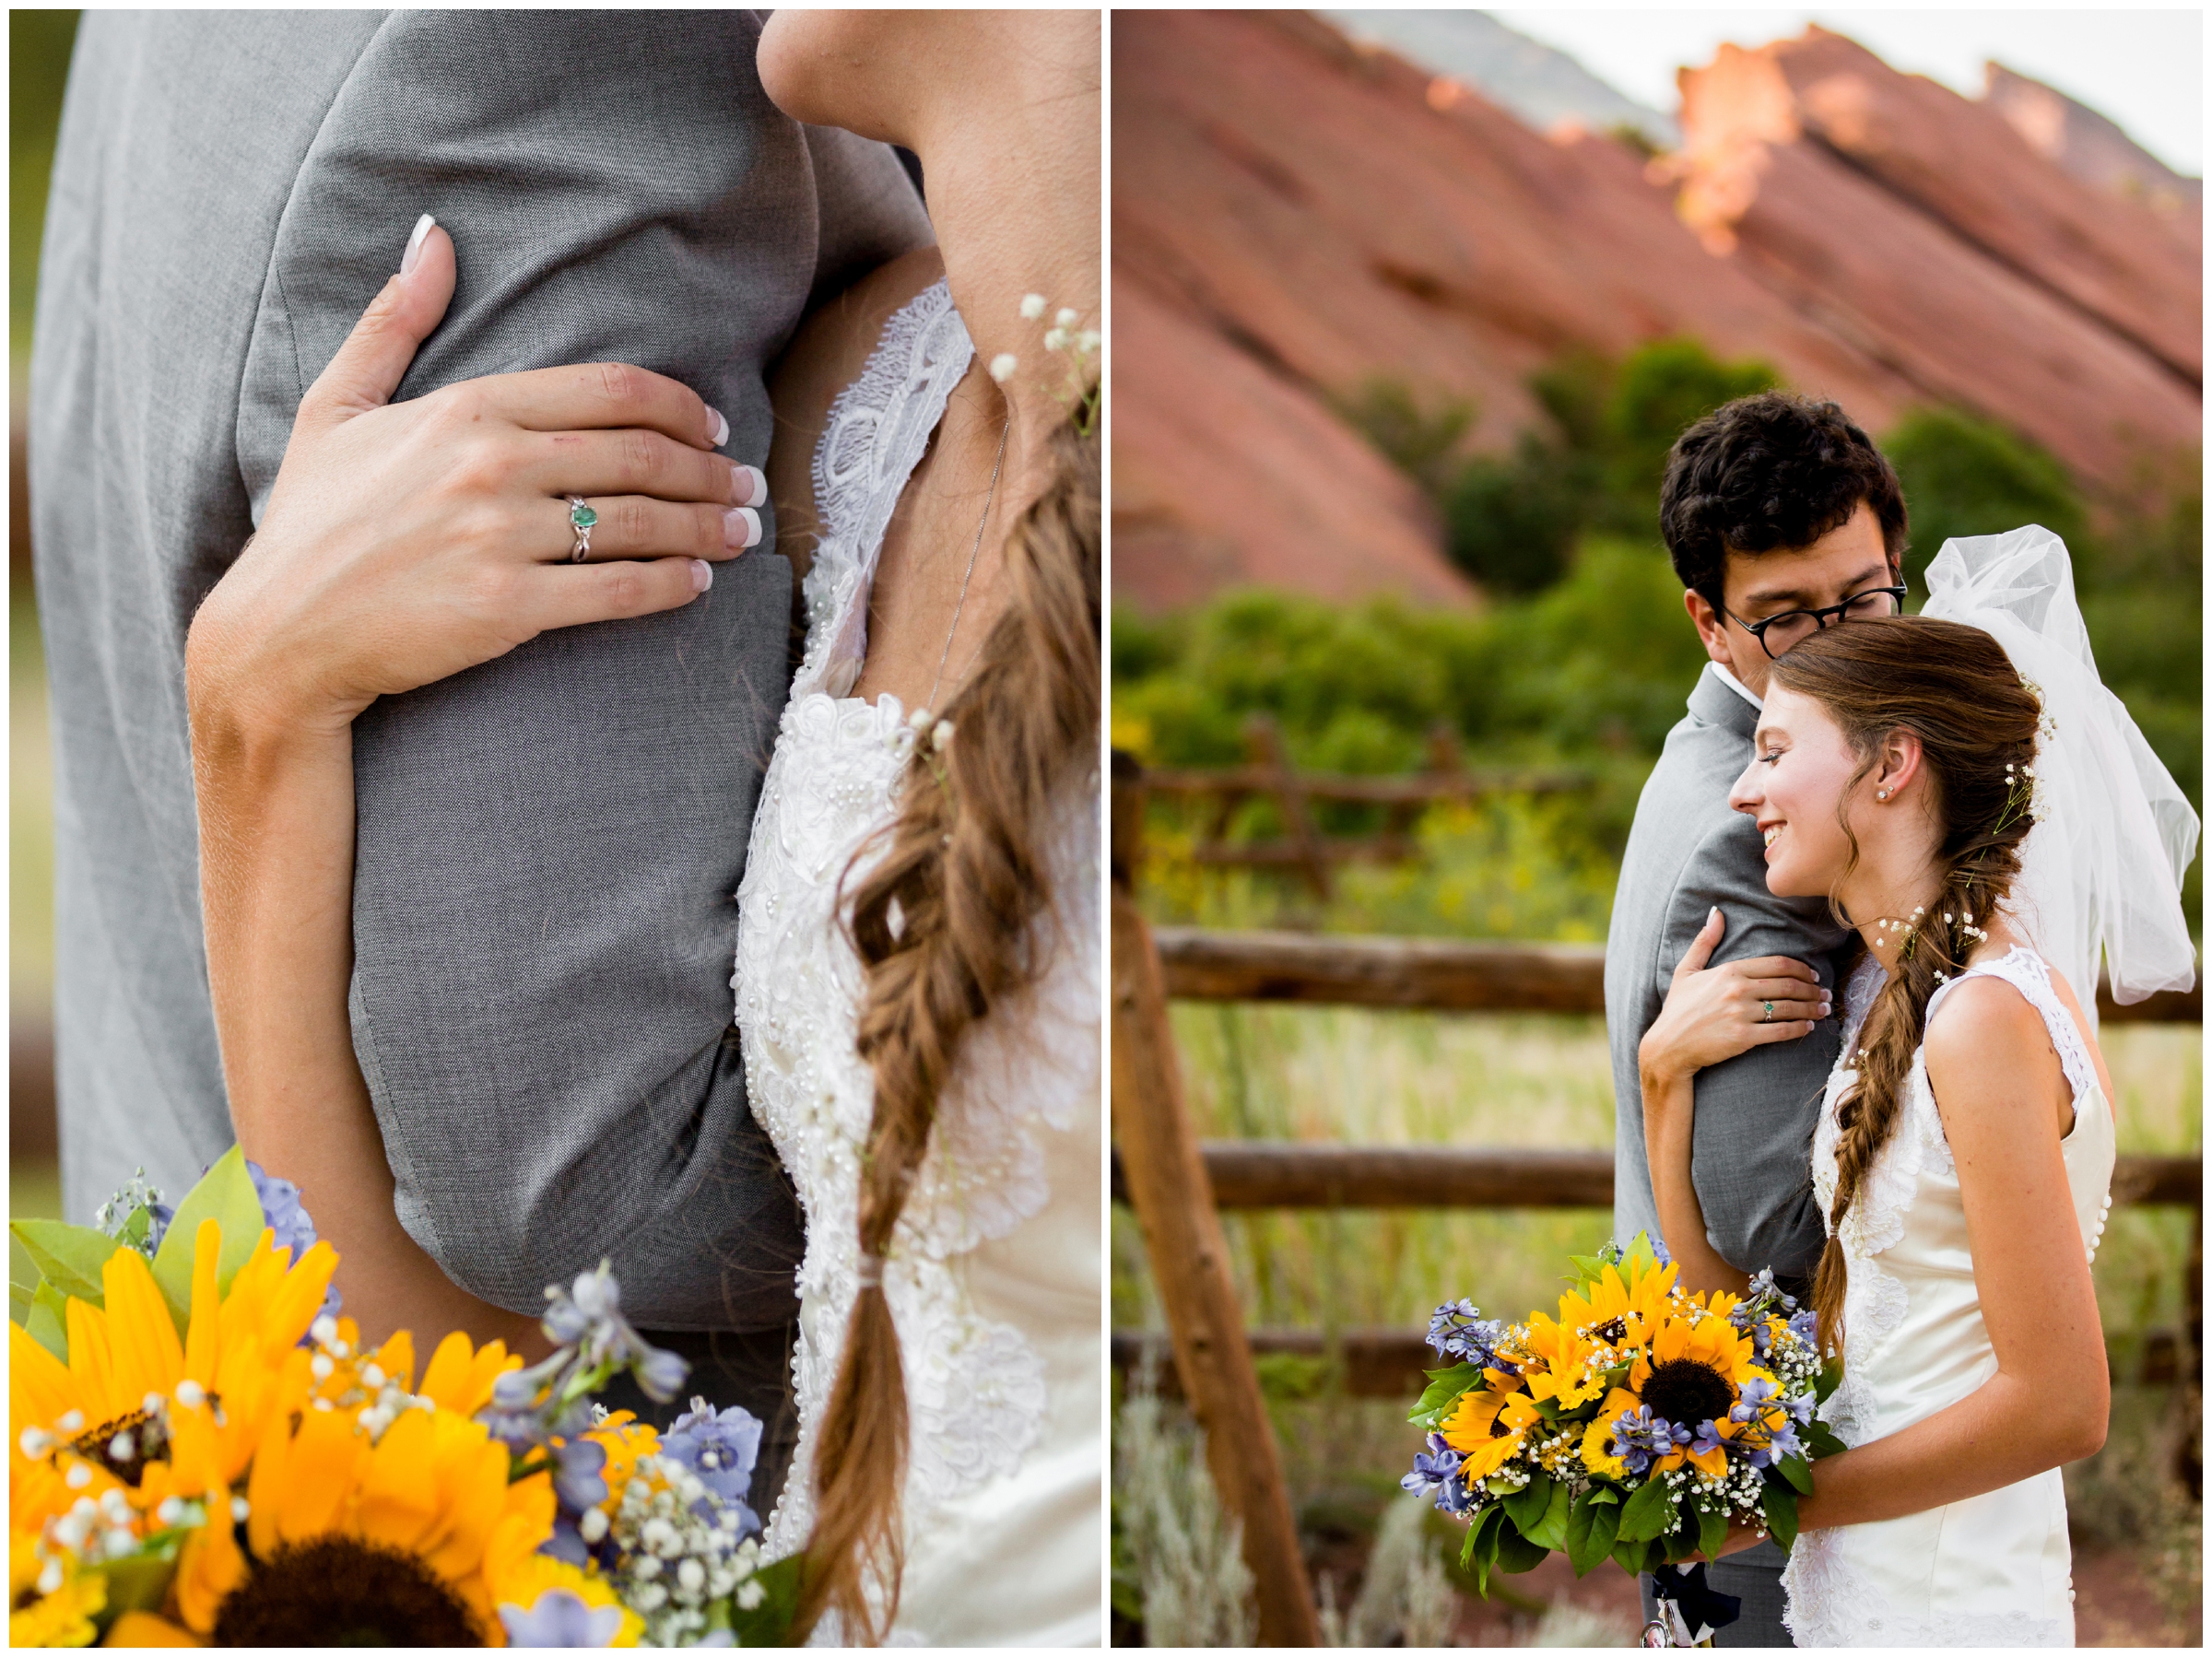 Red Rocks wedding photos by Colorado photographer Plum Pretty Photography. DIY backyard and Red Rocks Chapel wedding inspiration.